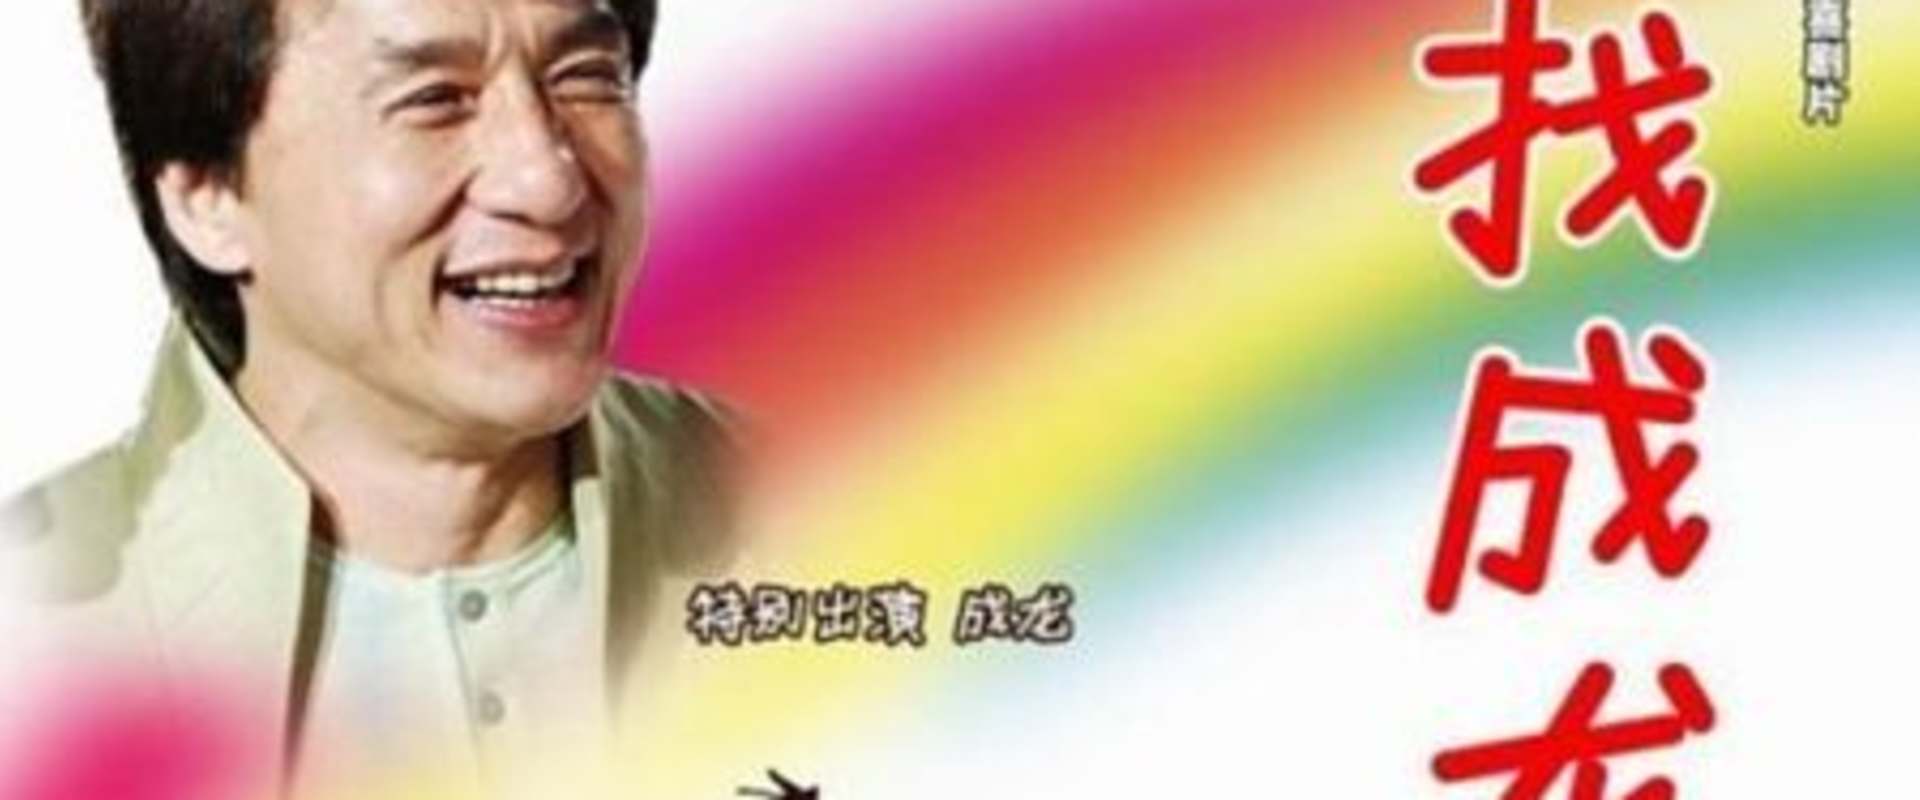 Jackie Chan Kung Fu Master background 1